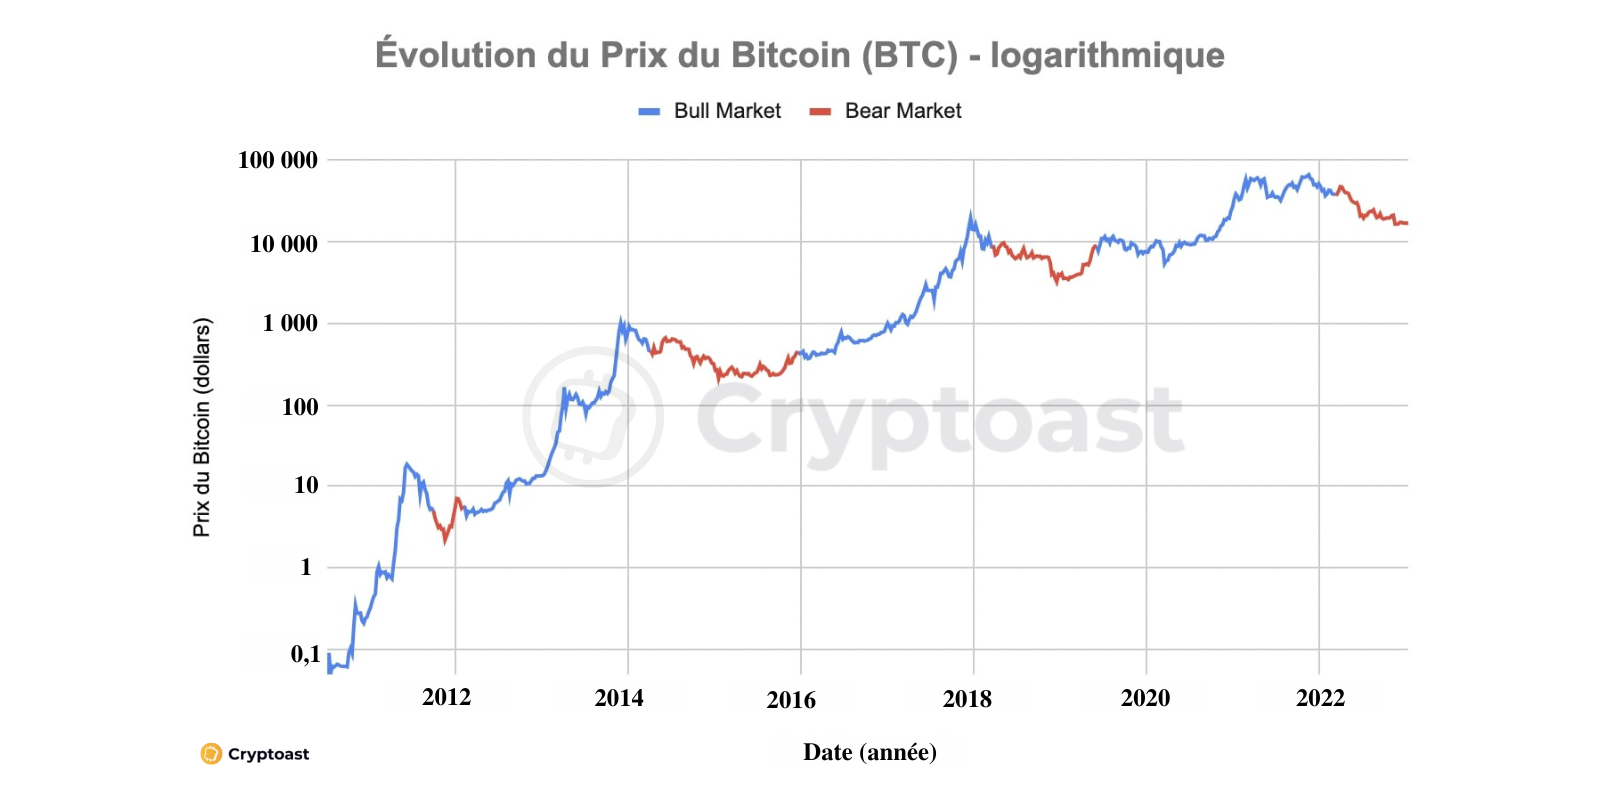 Evolution logarithmique du prix du Bitcoin avec Bull et Bear